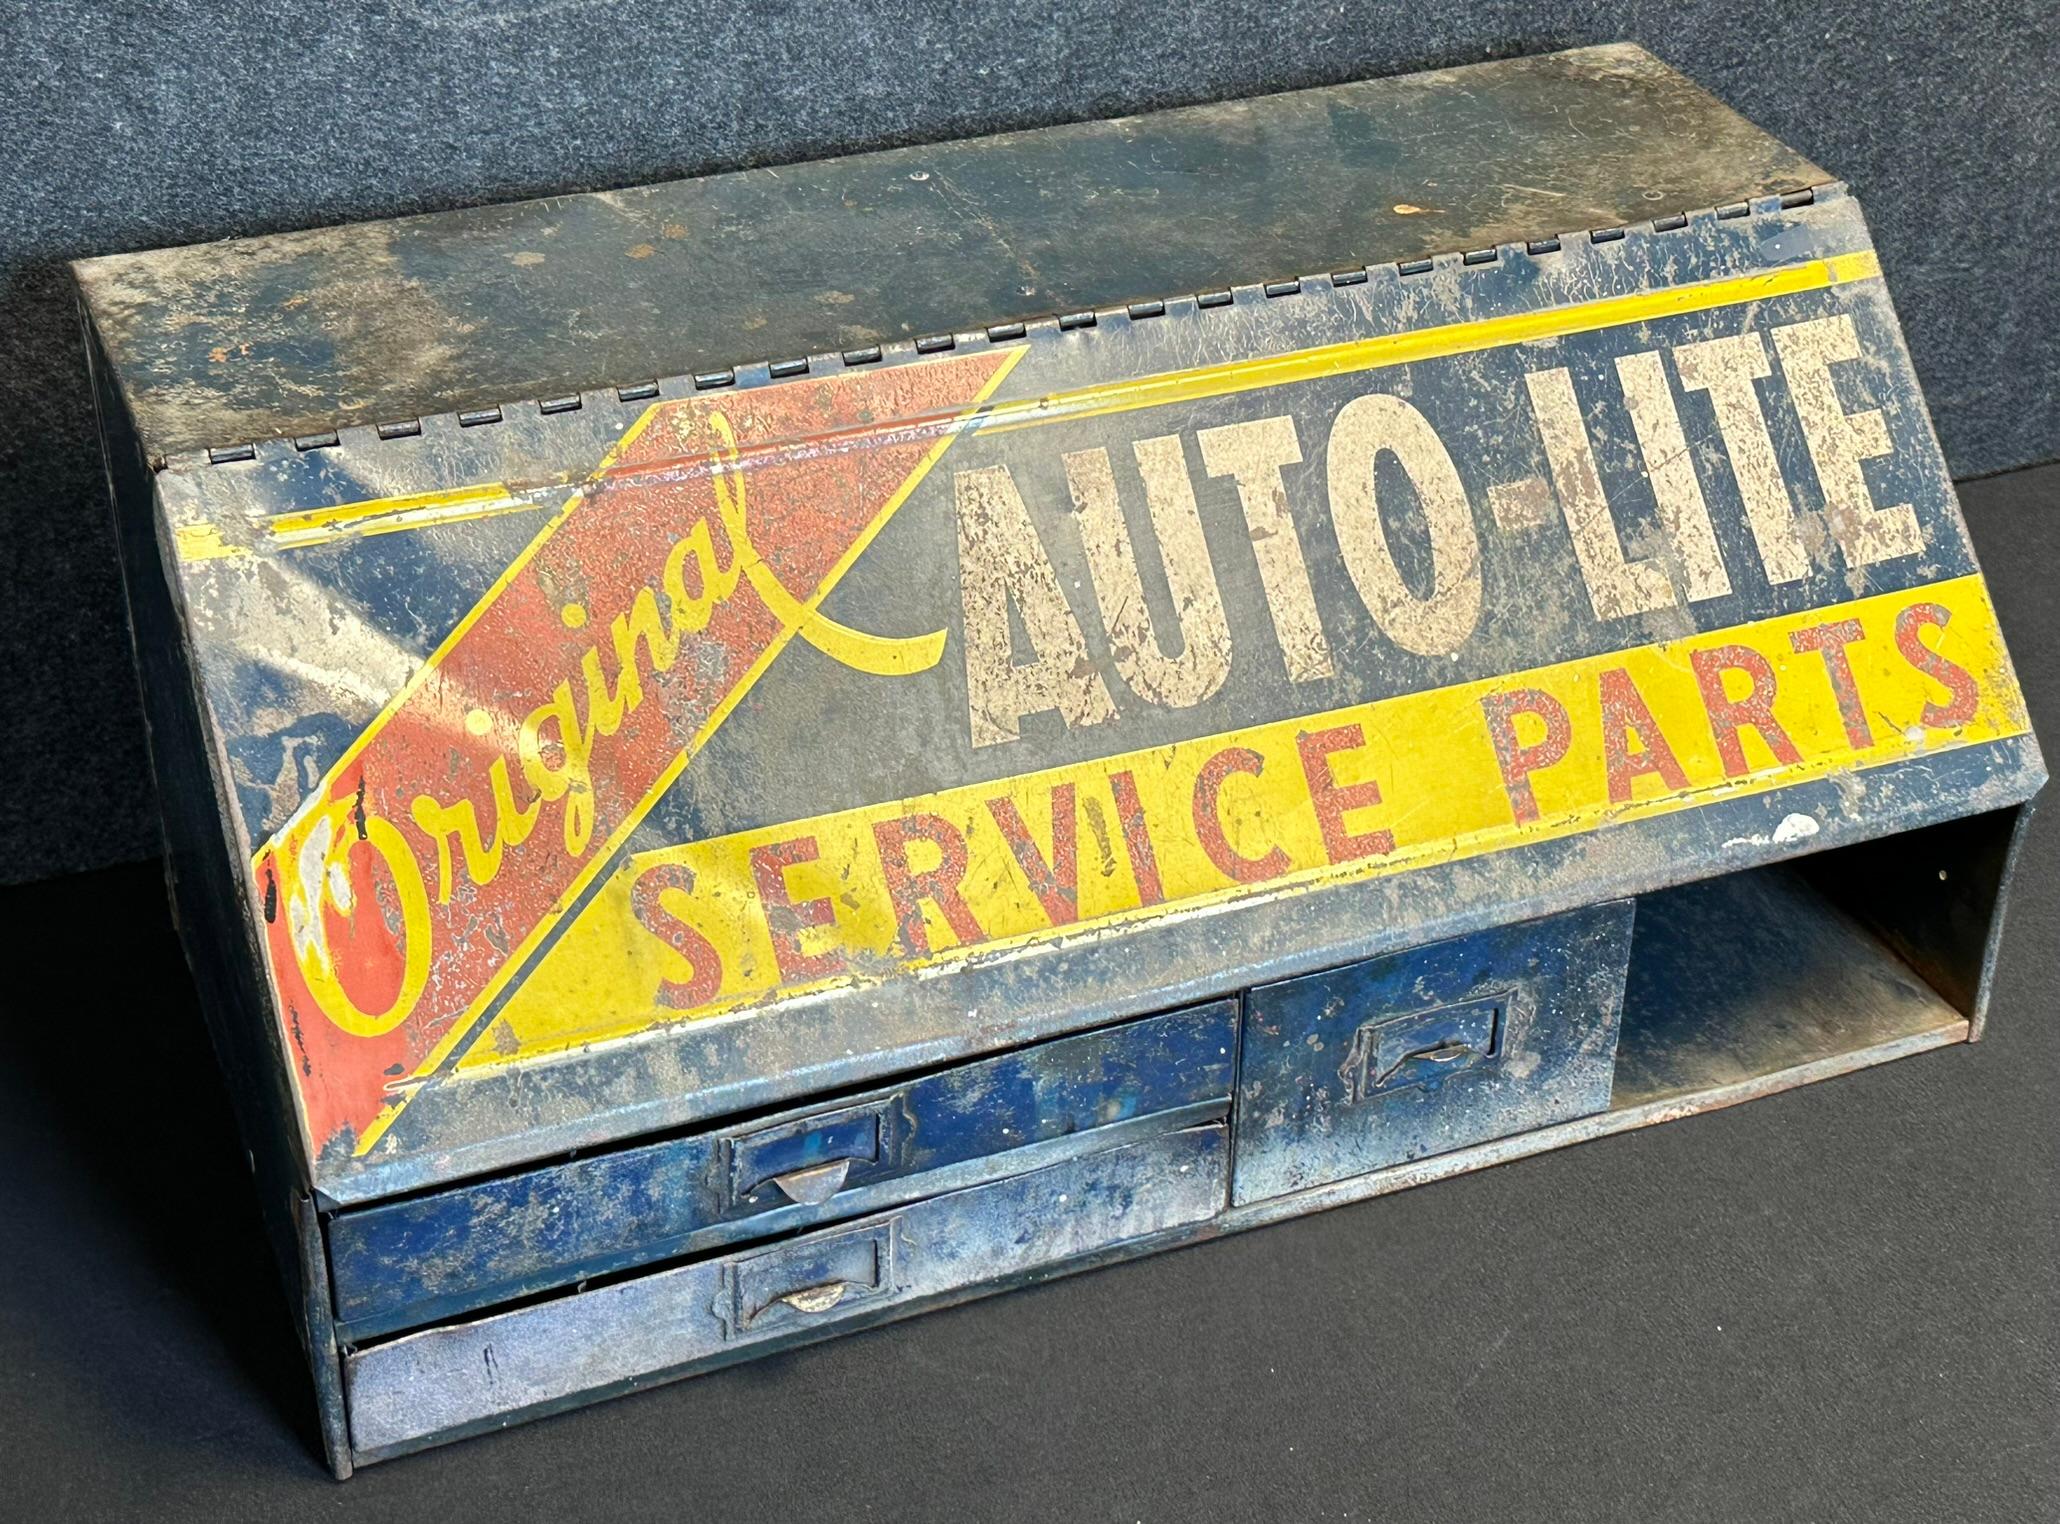 Autolite Original Service Parts Counter Top Advertising Slant Front Display